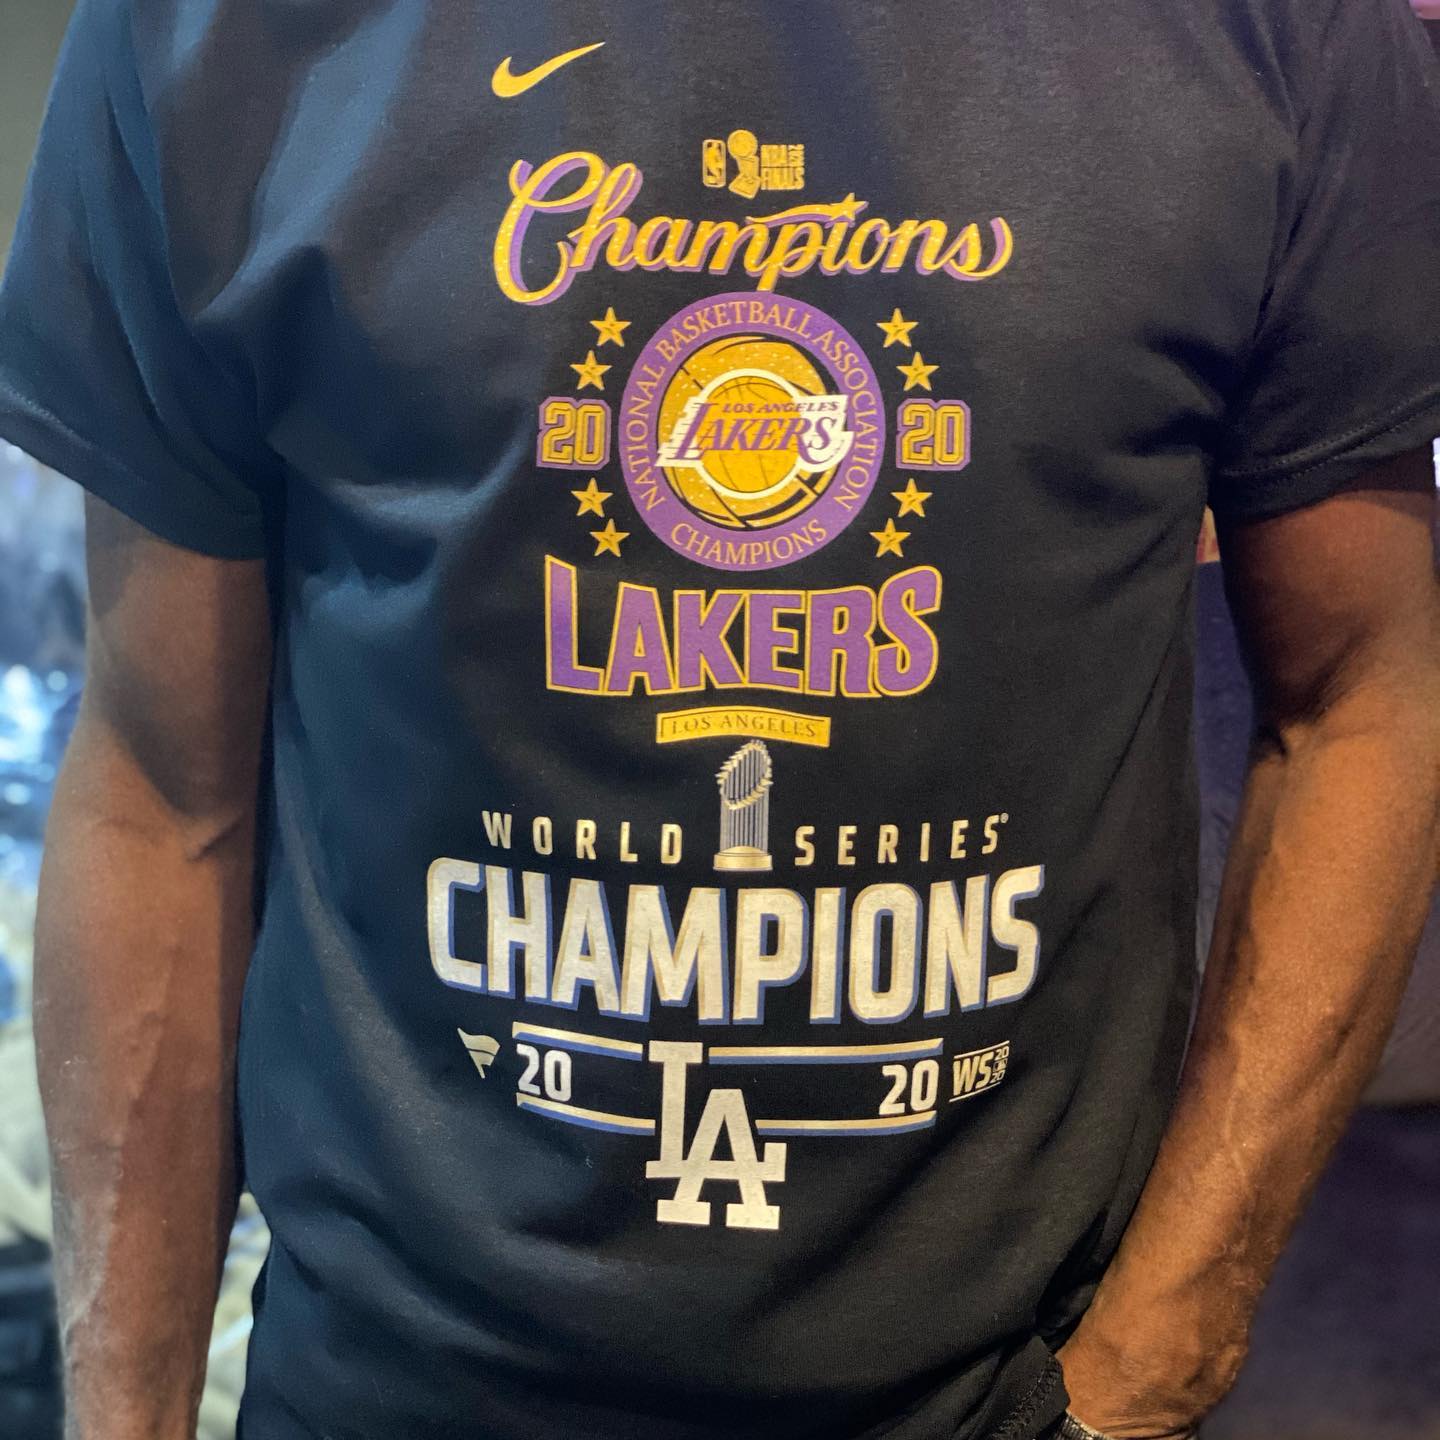 A Lakers championship T-shirt